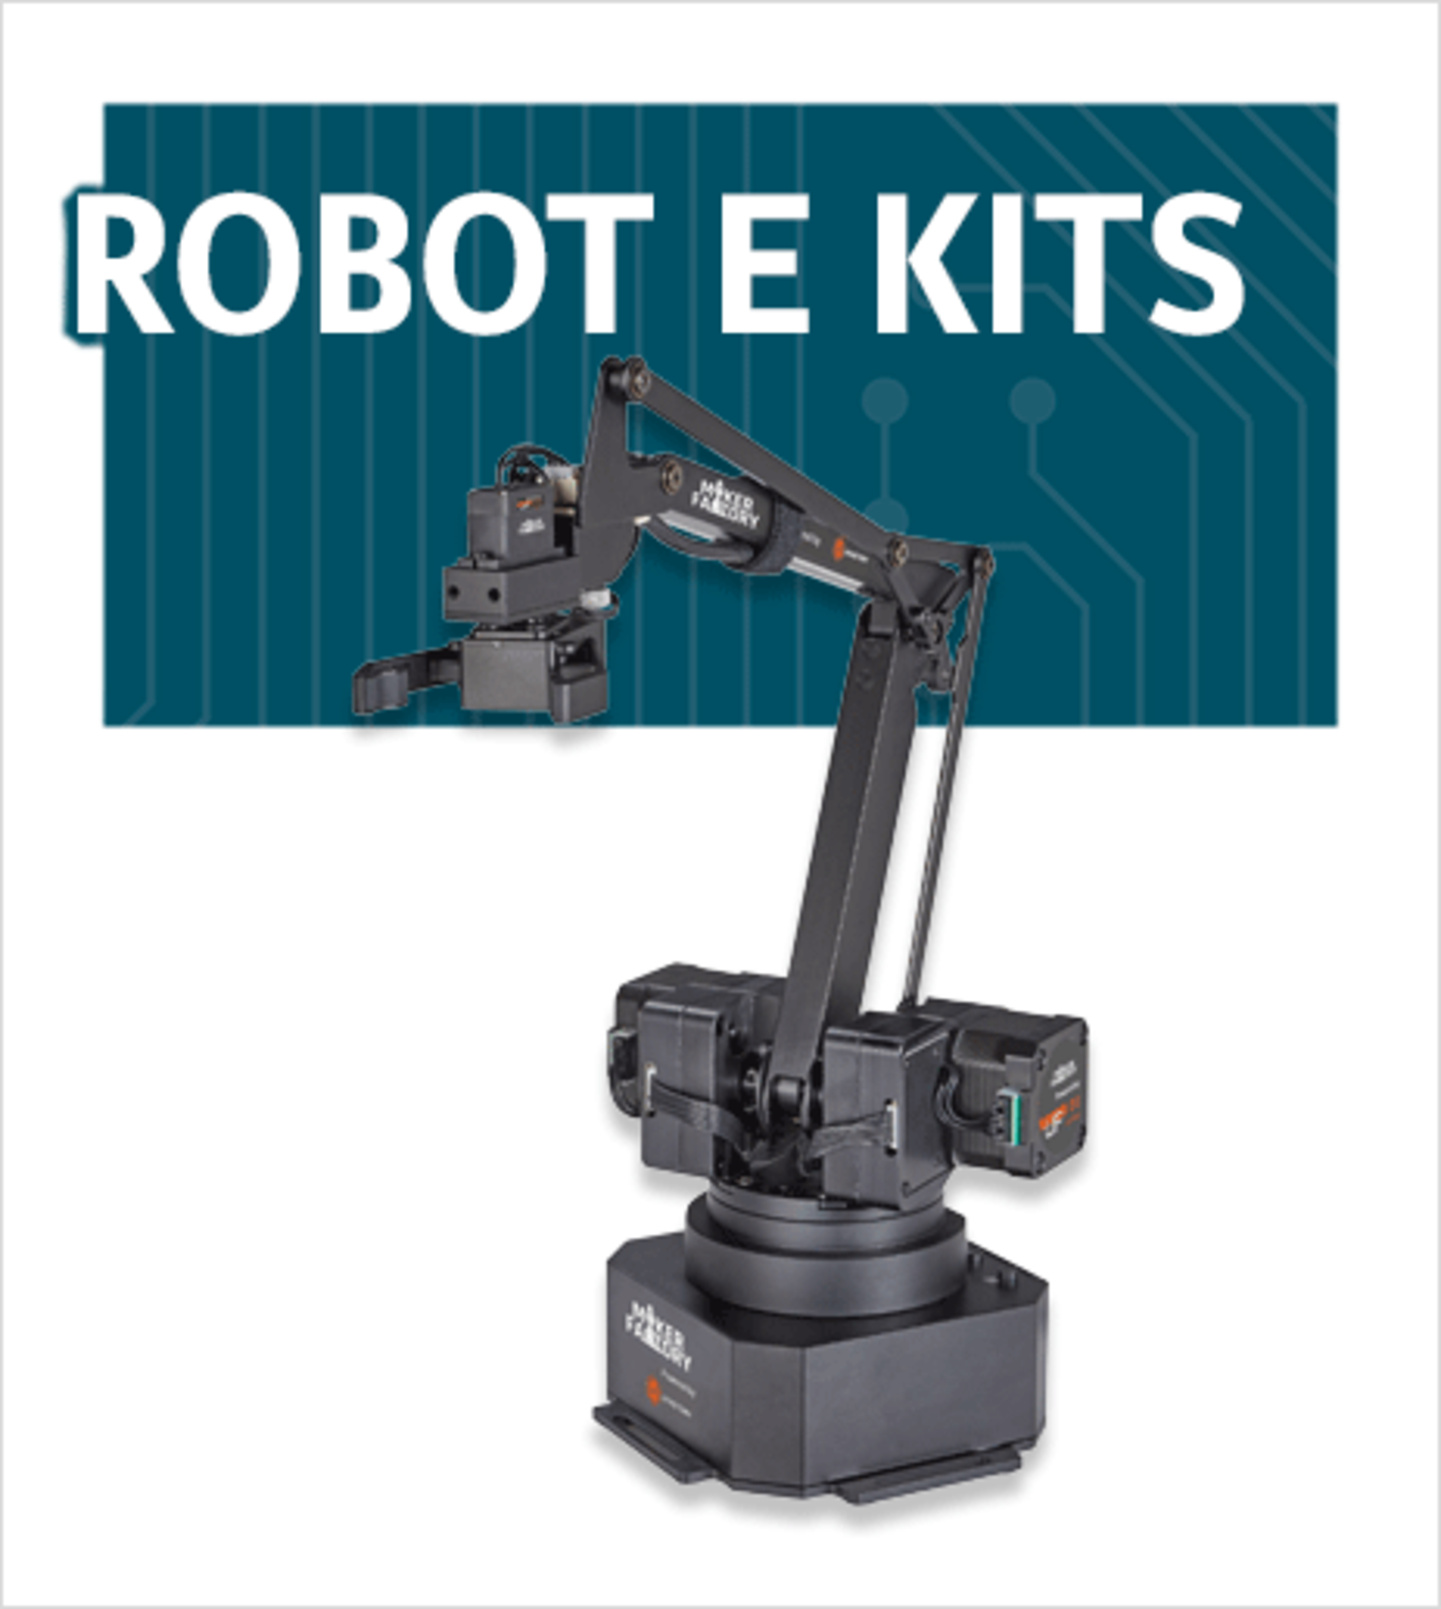 Robot e kits